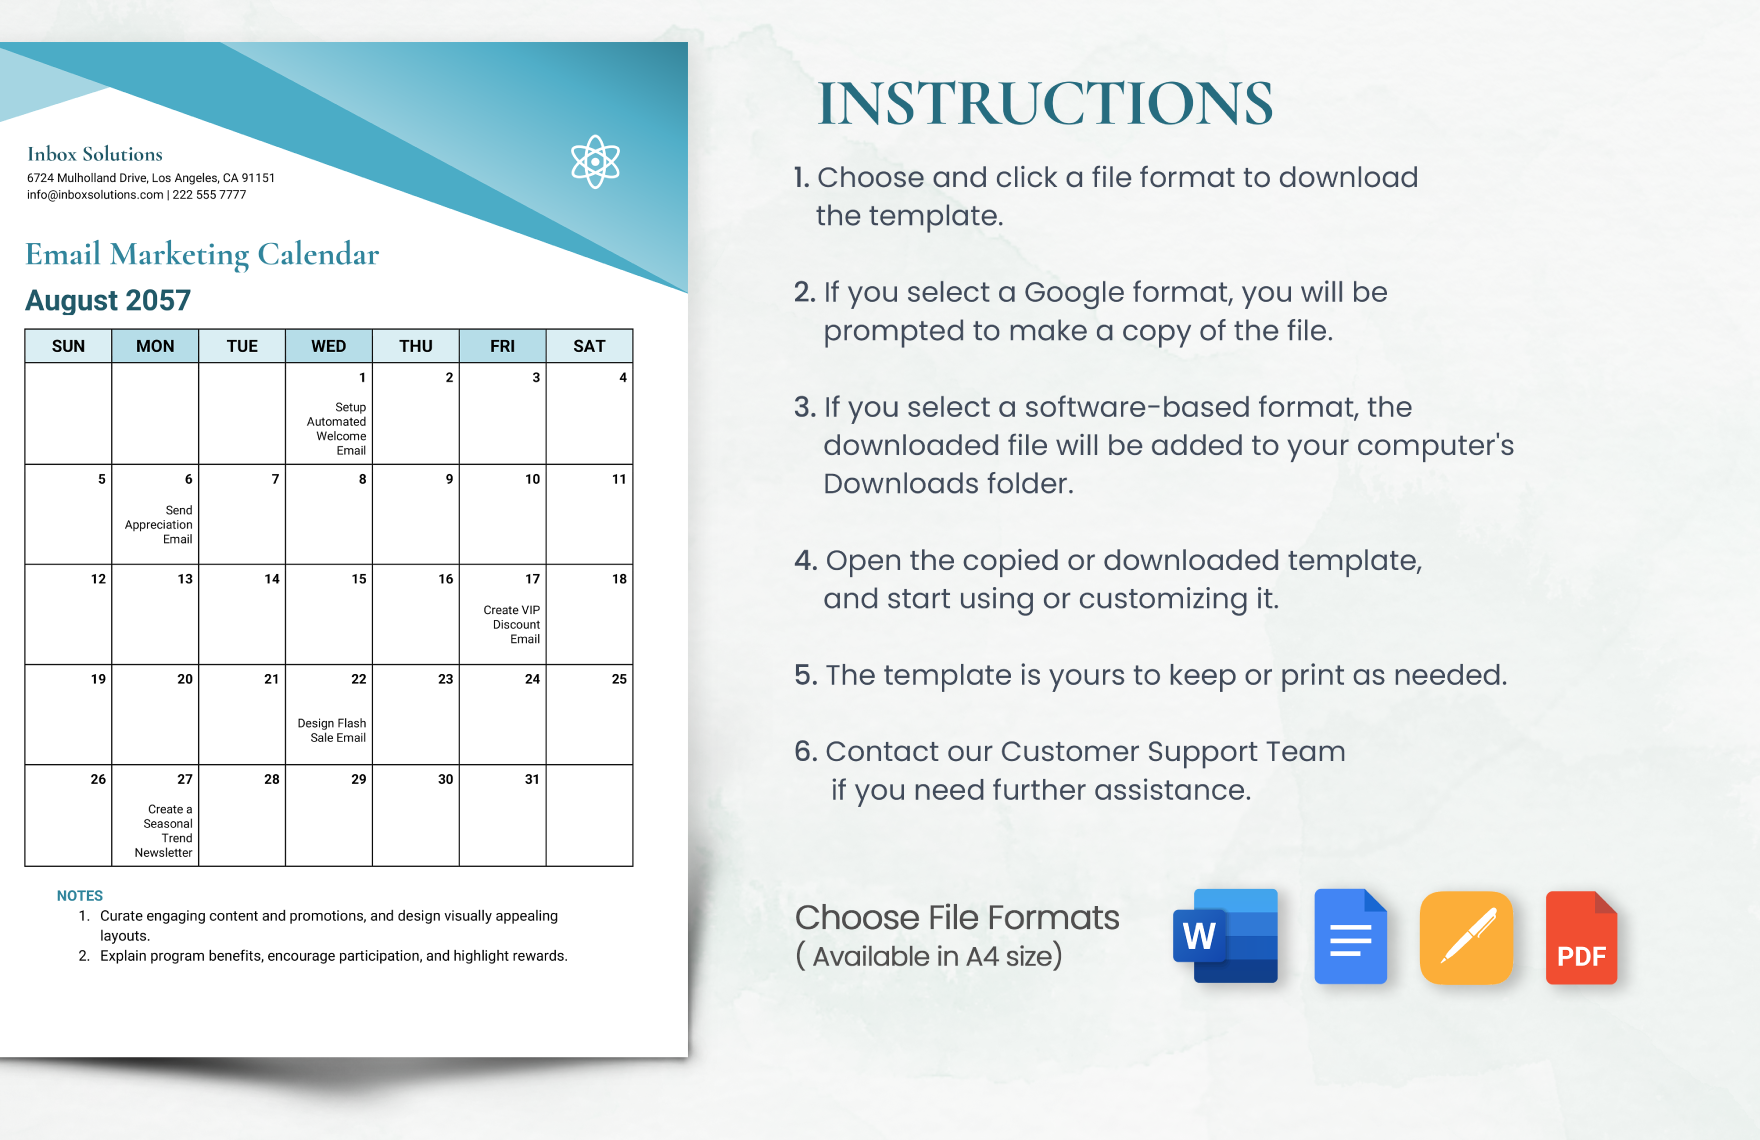 Email Marketing Calendar Template